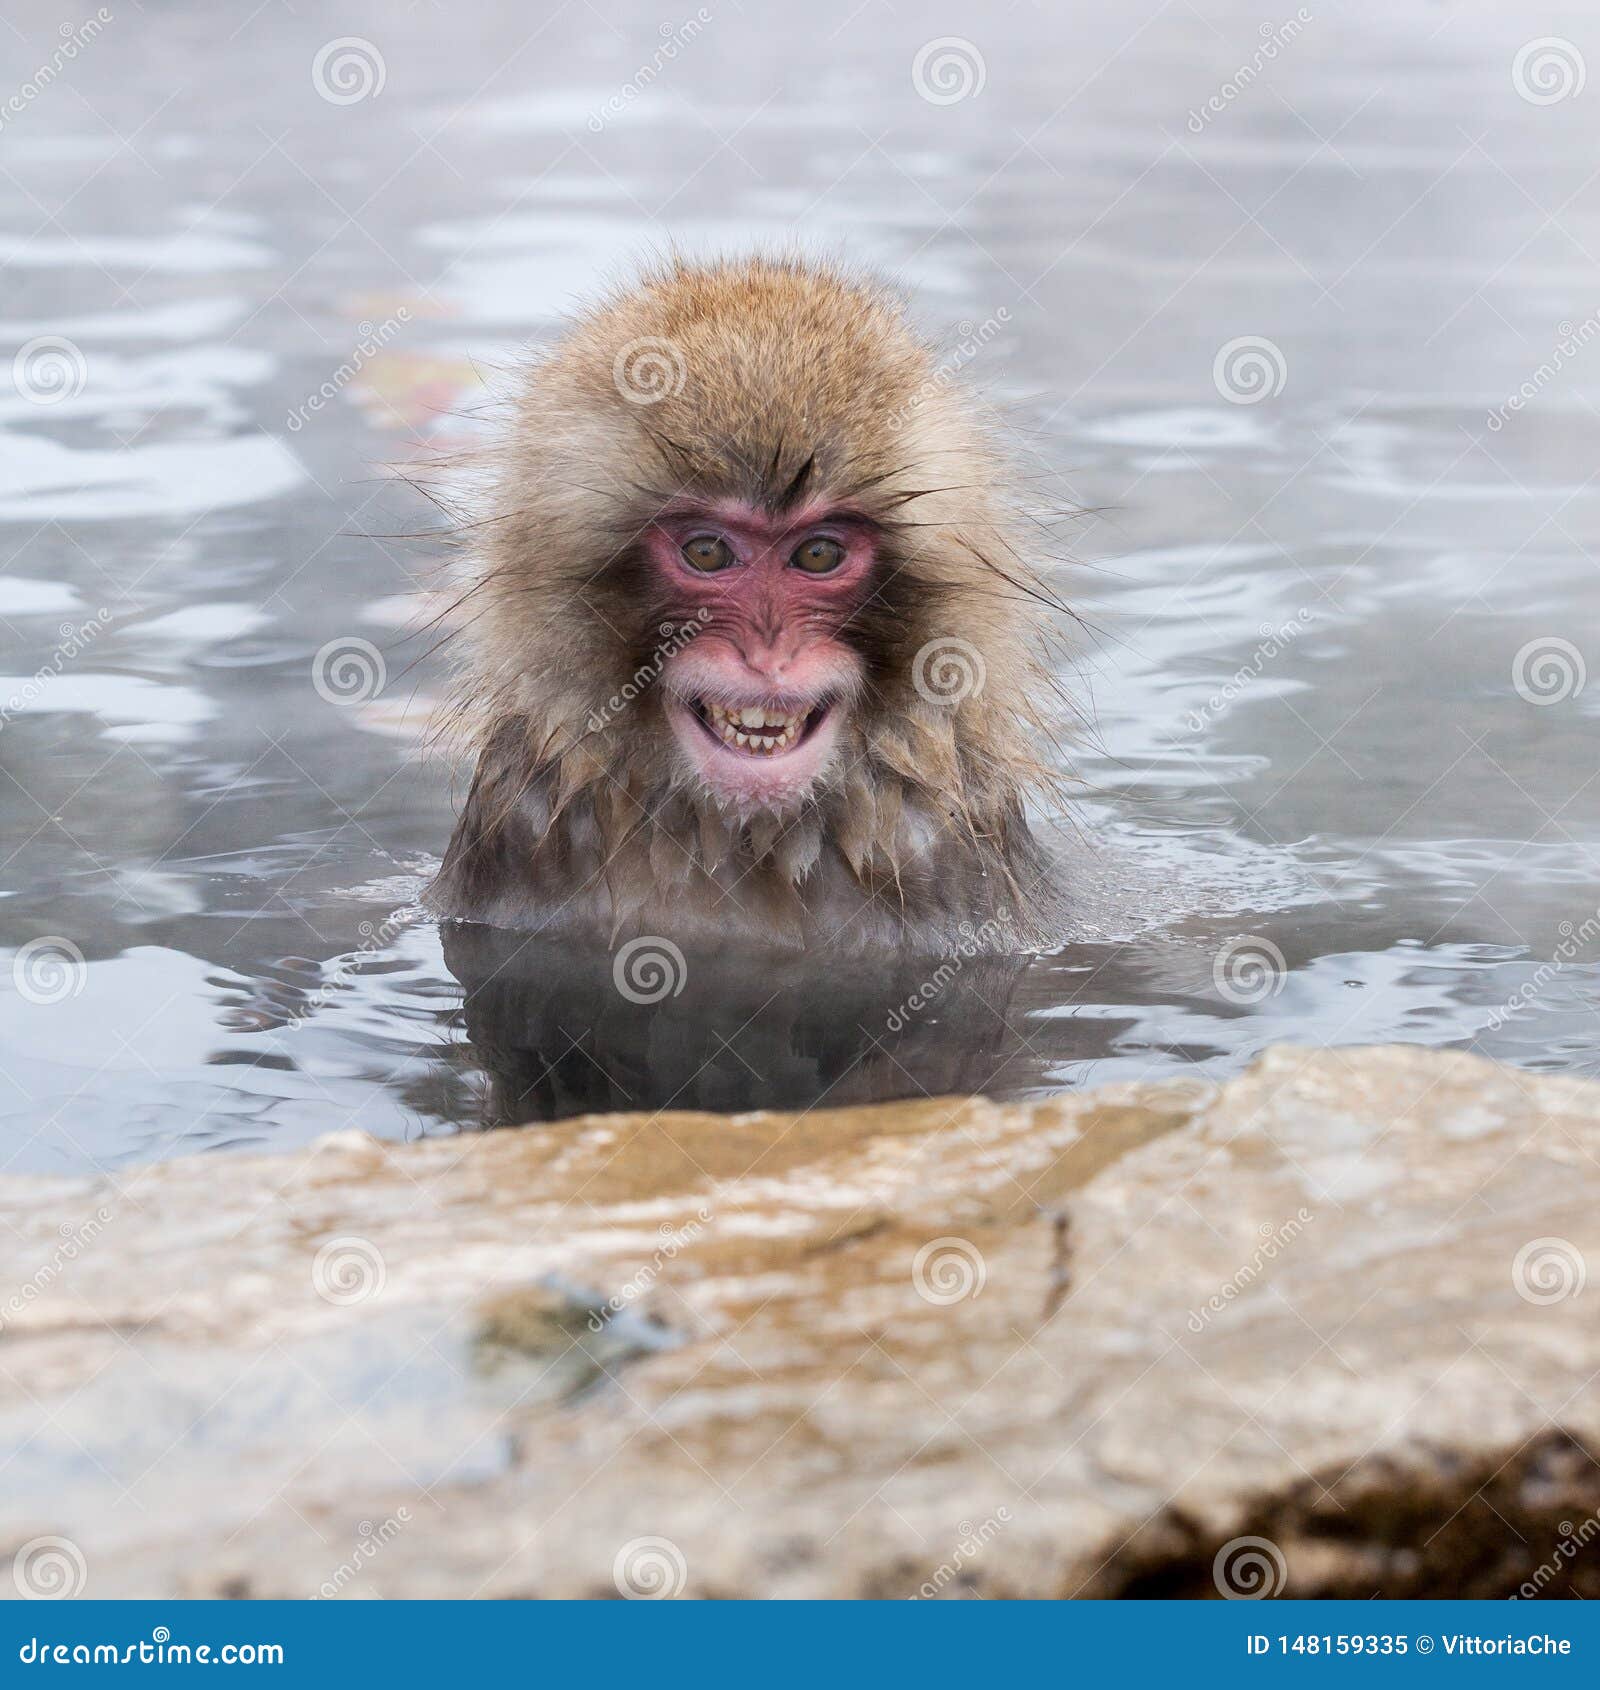 Raging Snow Monkey Macaca Fuscata from Jigokudani Monkey Park in Japan,  Nagano Prefecture. Japanese Macaque. Stock Image - Image of jigokudani,  dangerous: 148159335